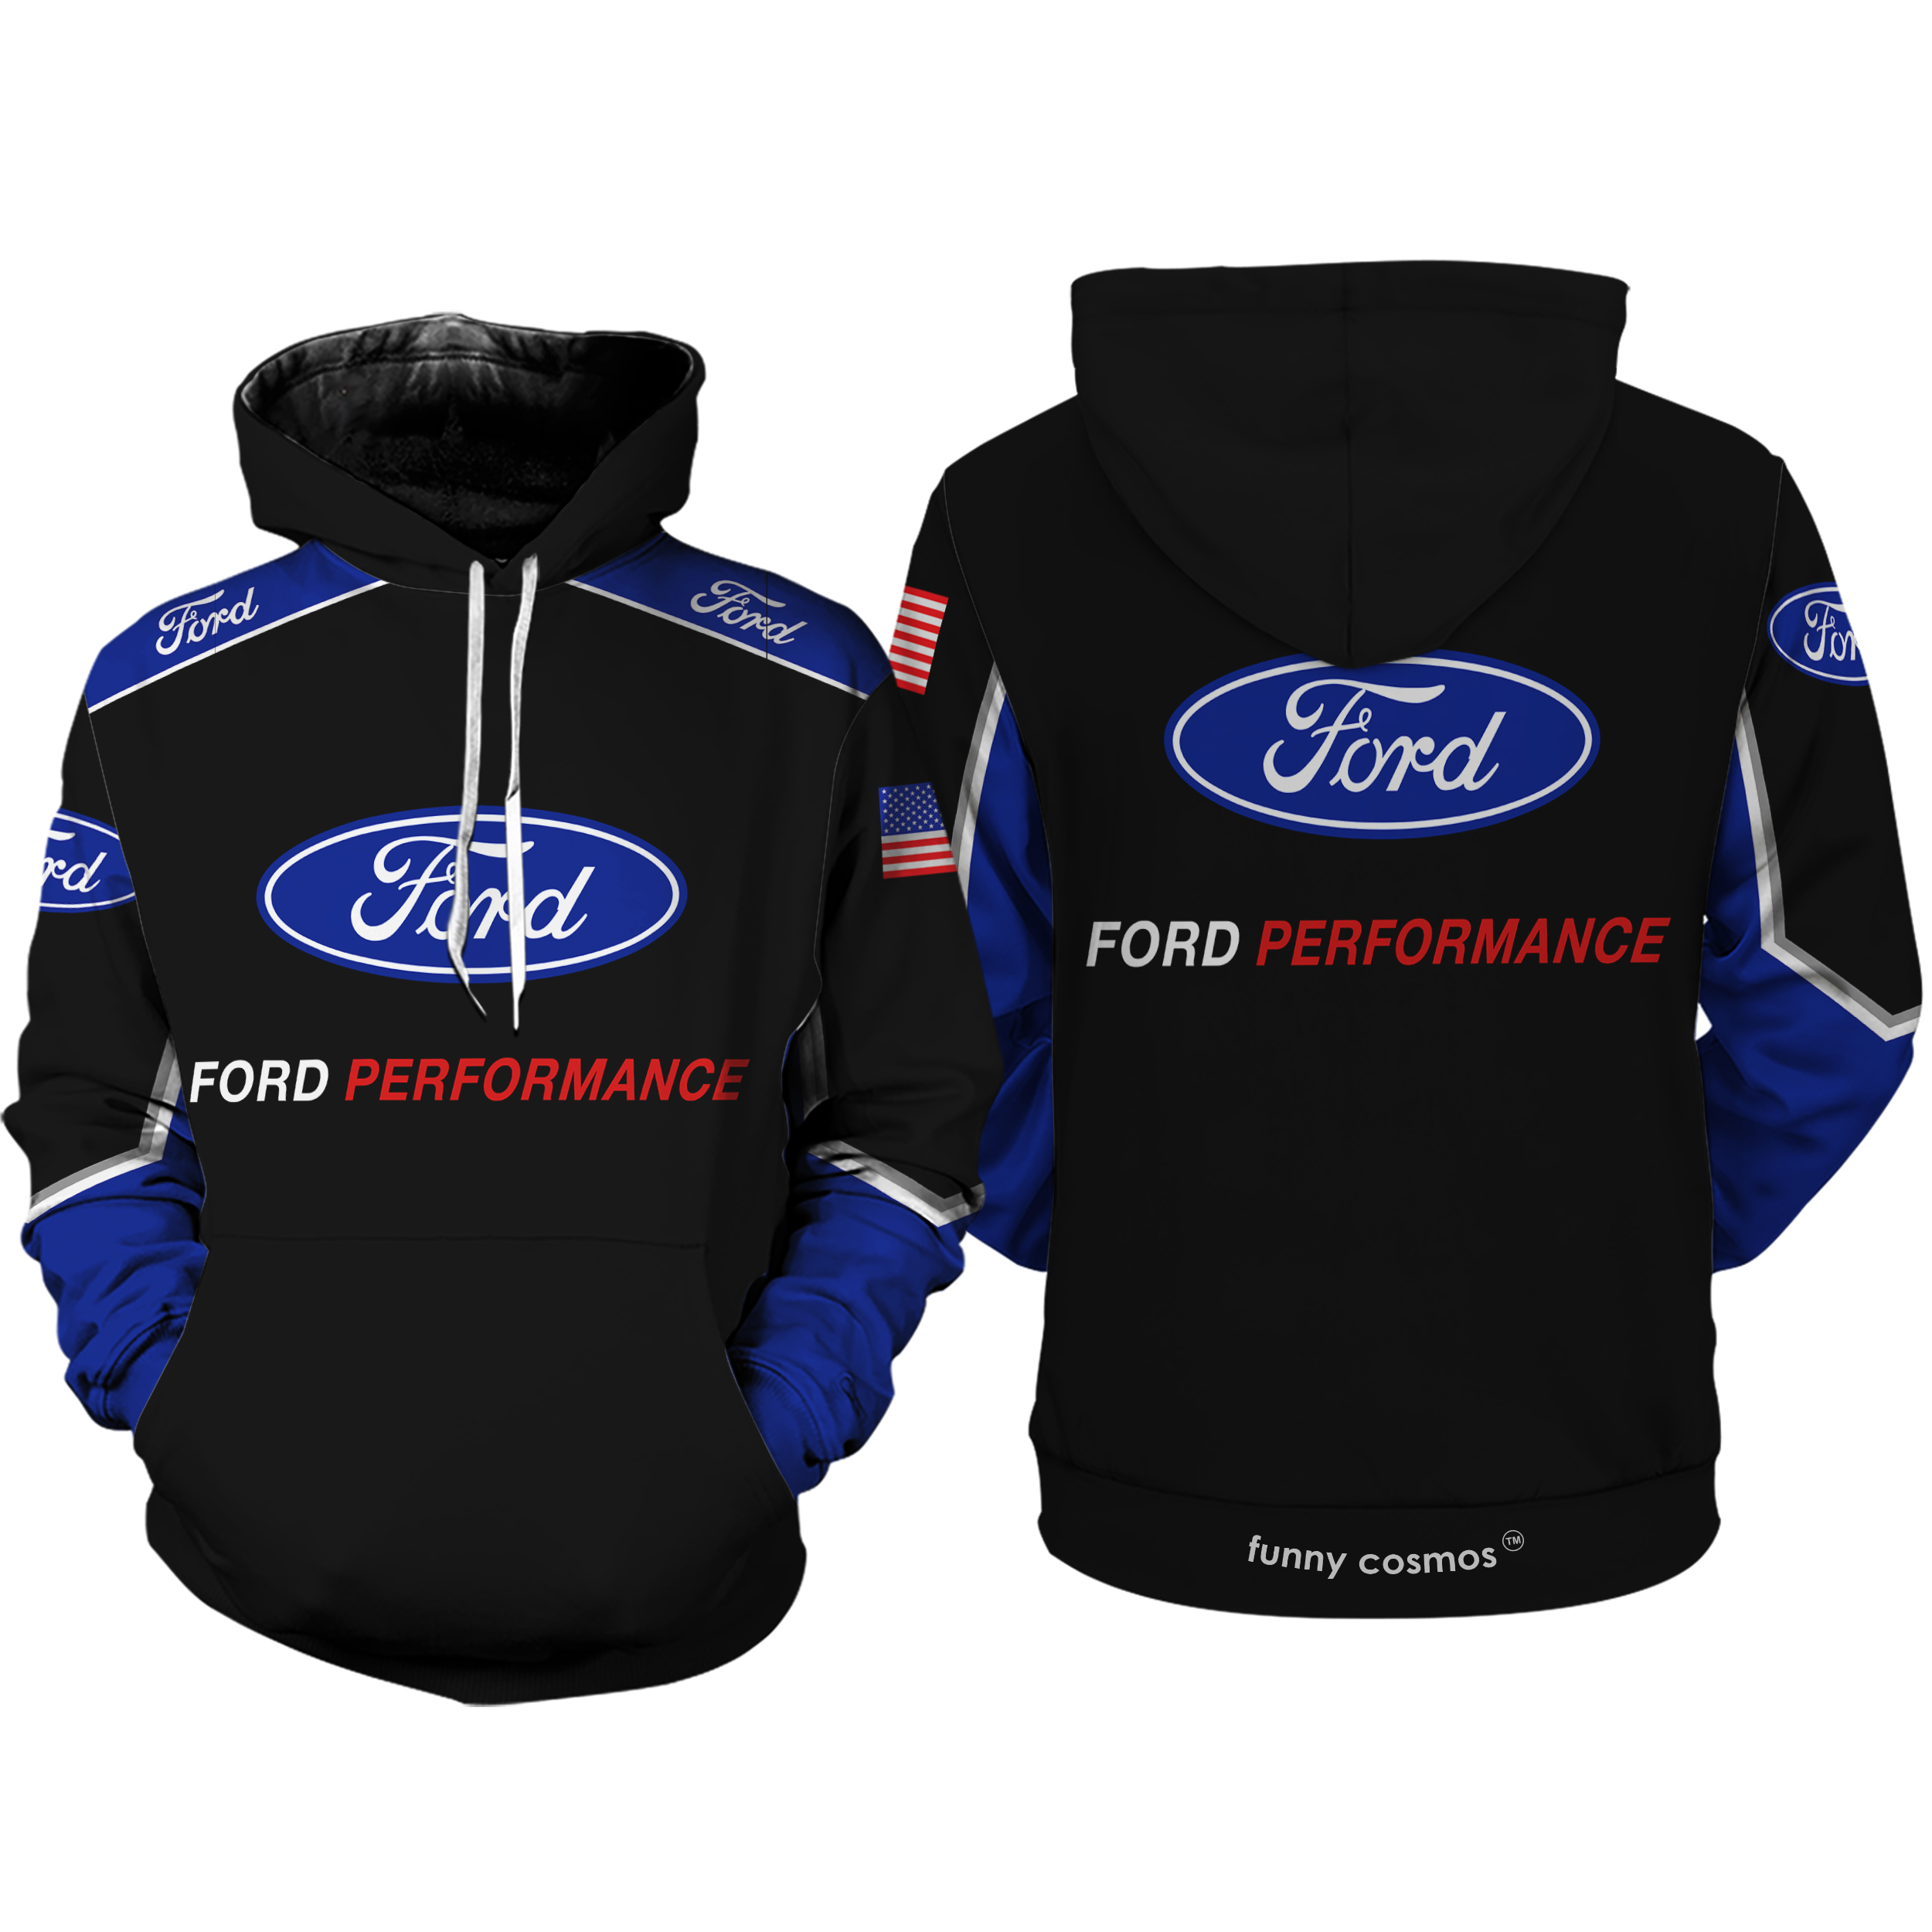 https://kozmozcyber.com/wp-content/uploads/2021/12/AHB1201-271304-Hoodie-Ford-Performance-Usa-Flat-Ford-Motor-Company-Ford-Racing-Logo-Racing-Uniform-hoodie.jpg